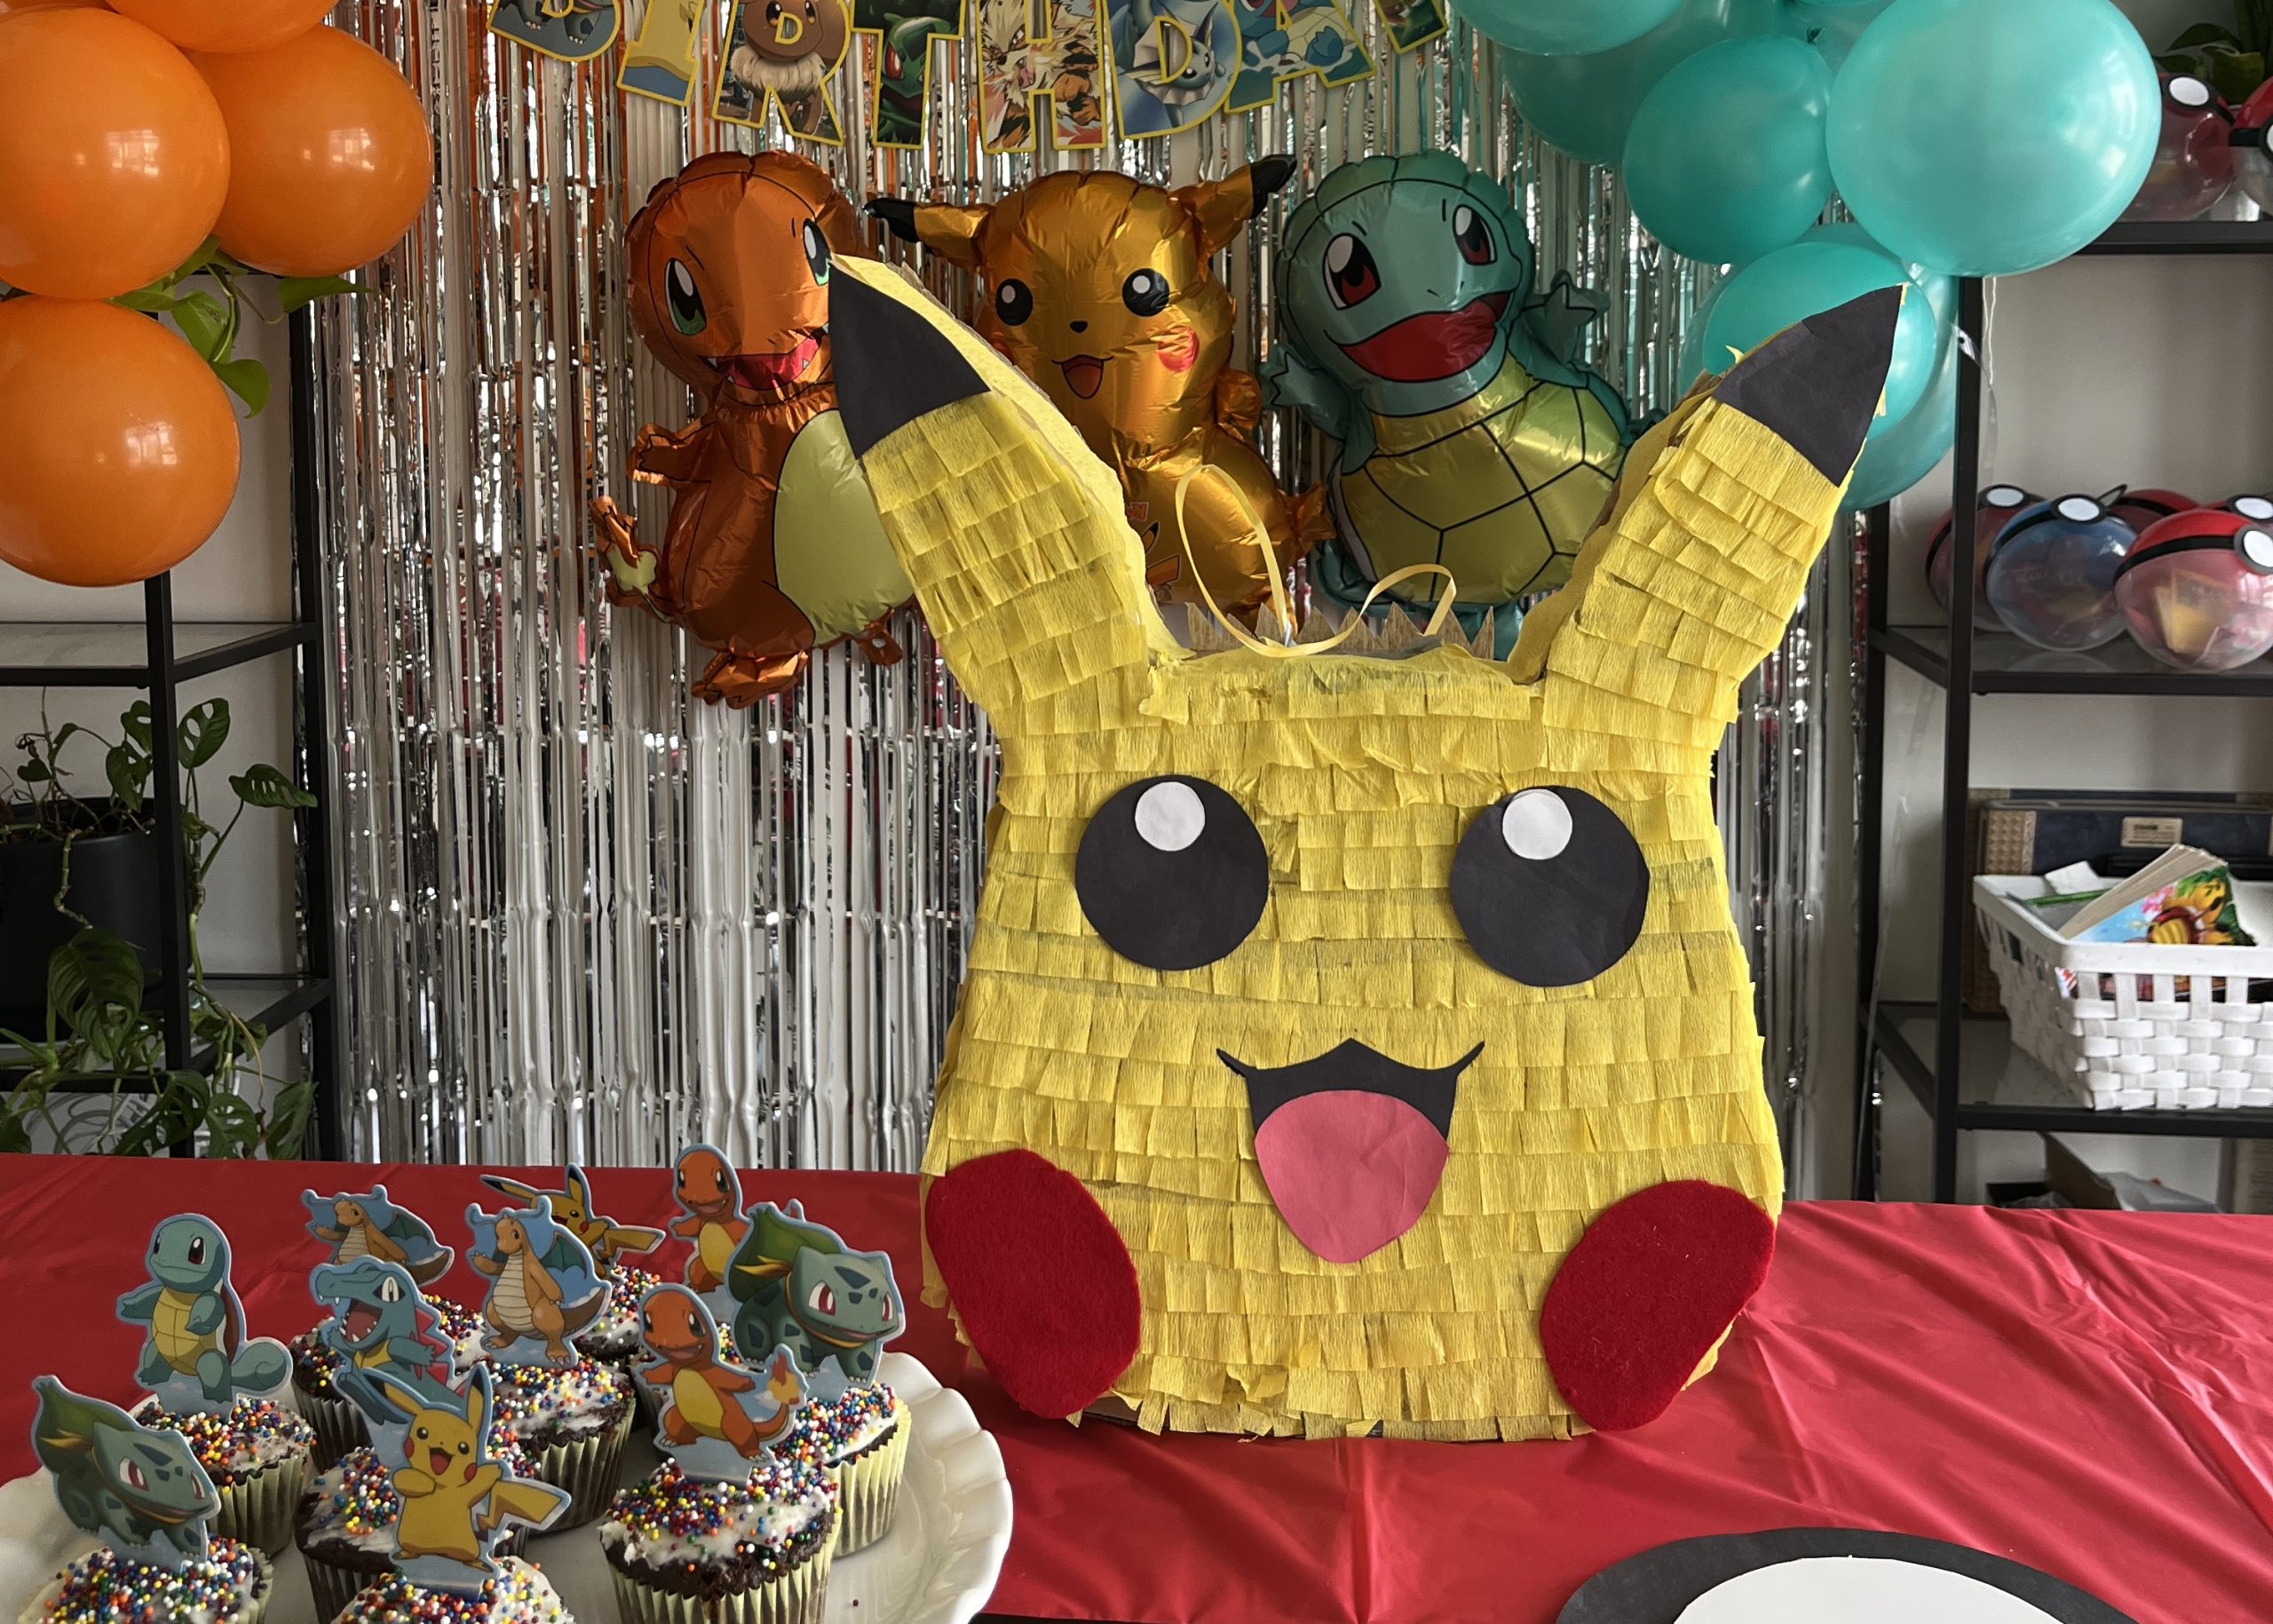 Pokemon Snorlax | Hand Made Medium Size Piñata 17 | Birthday Party Pinata